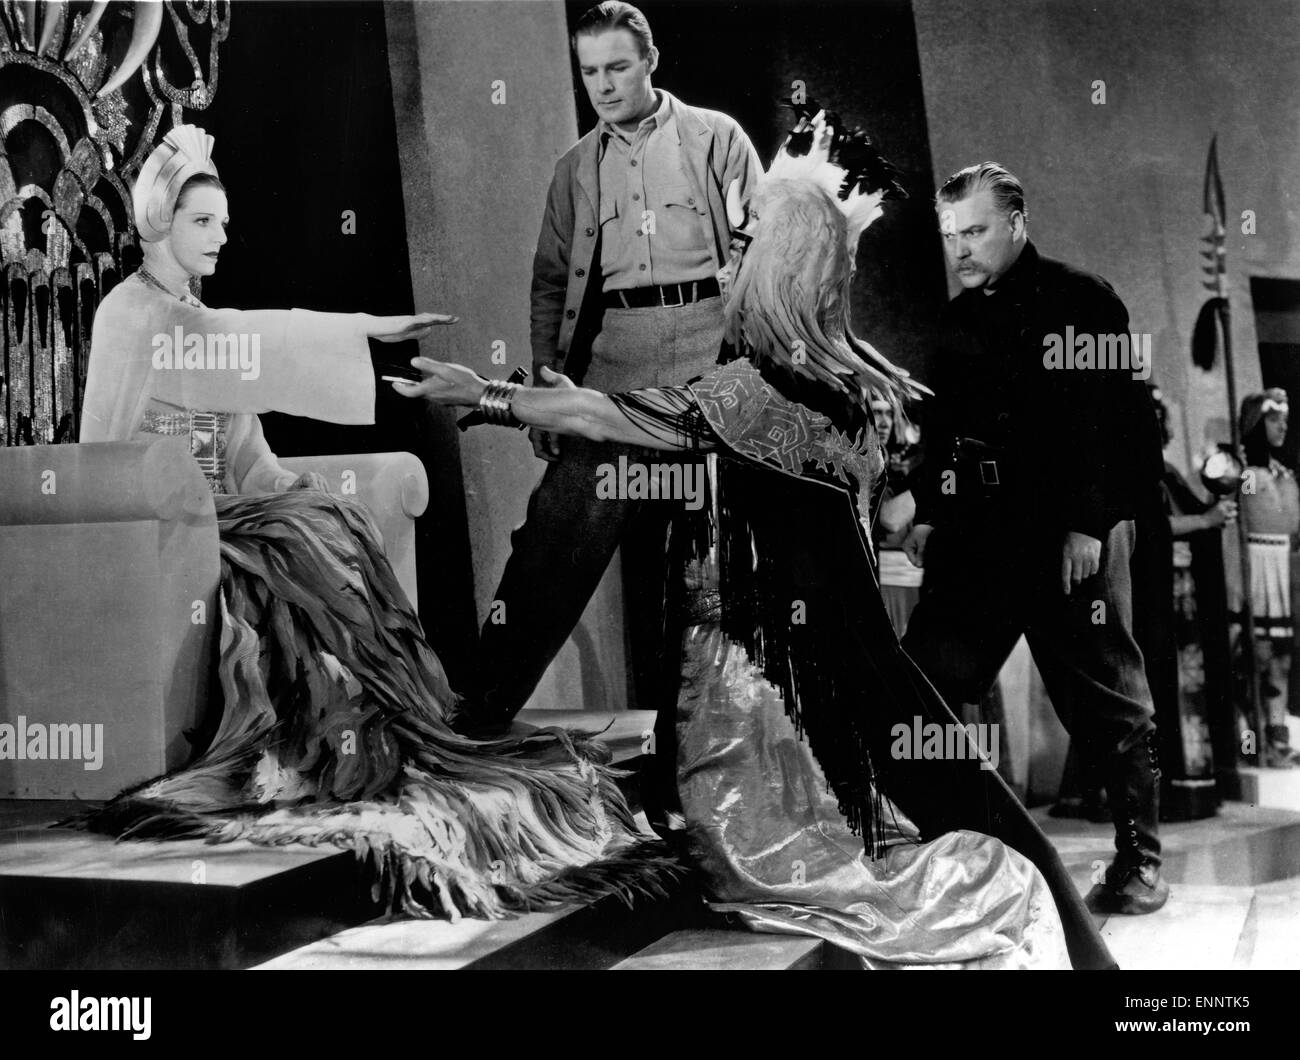 She, aka: She - Herrscherin einer versunkenen Welt, USA 1935, Regie: Lansing C. Holden, Iriving Pichel, Darsteller: Helen Gahaga Stock Photo